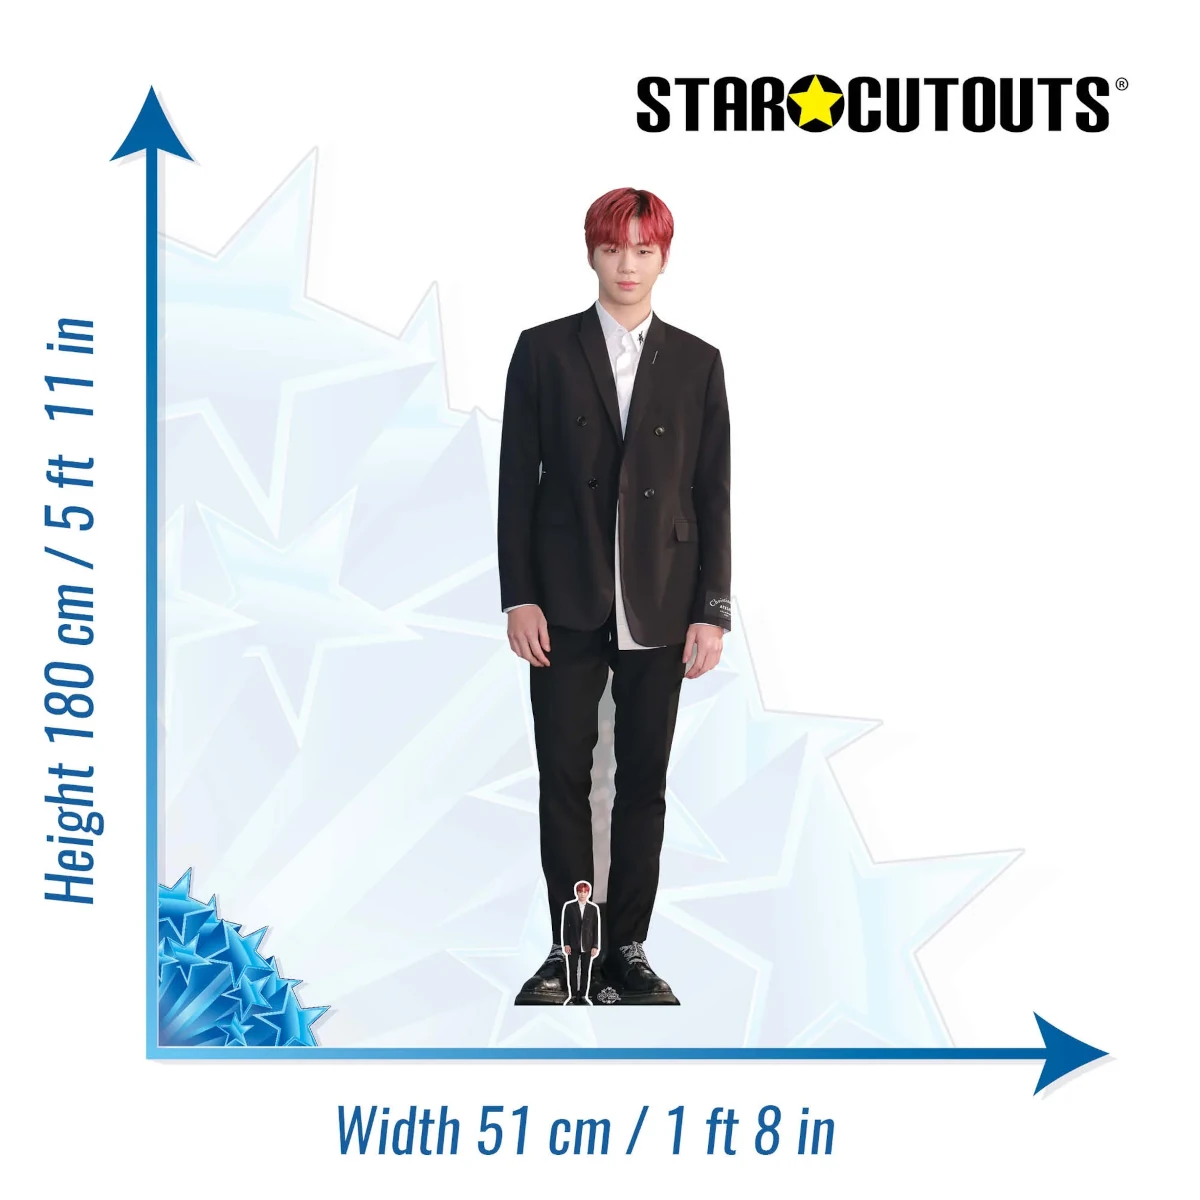 CS856 Kang Daniel 'Red Hair' (South Korean Singer) Lifesize + Mini Cardboard Cutout Standee Size